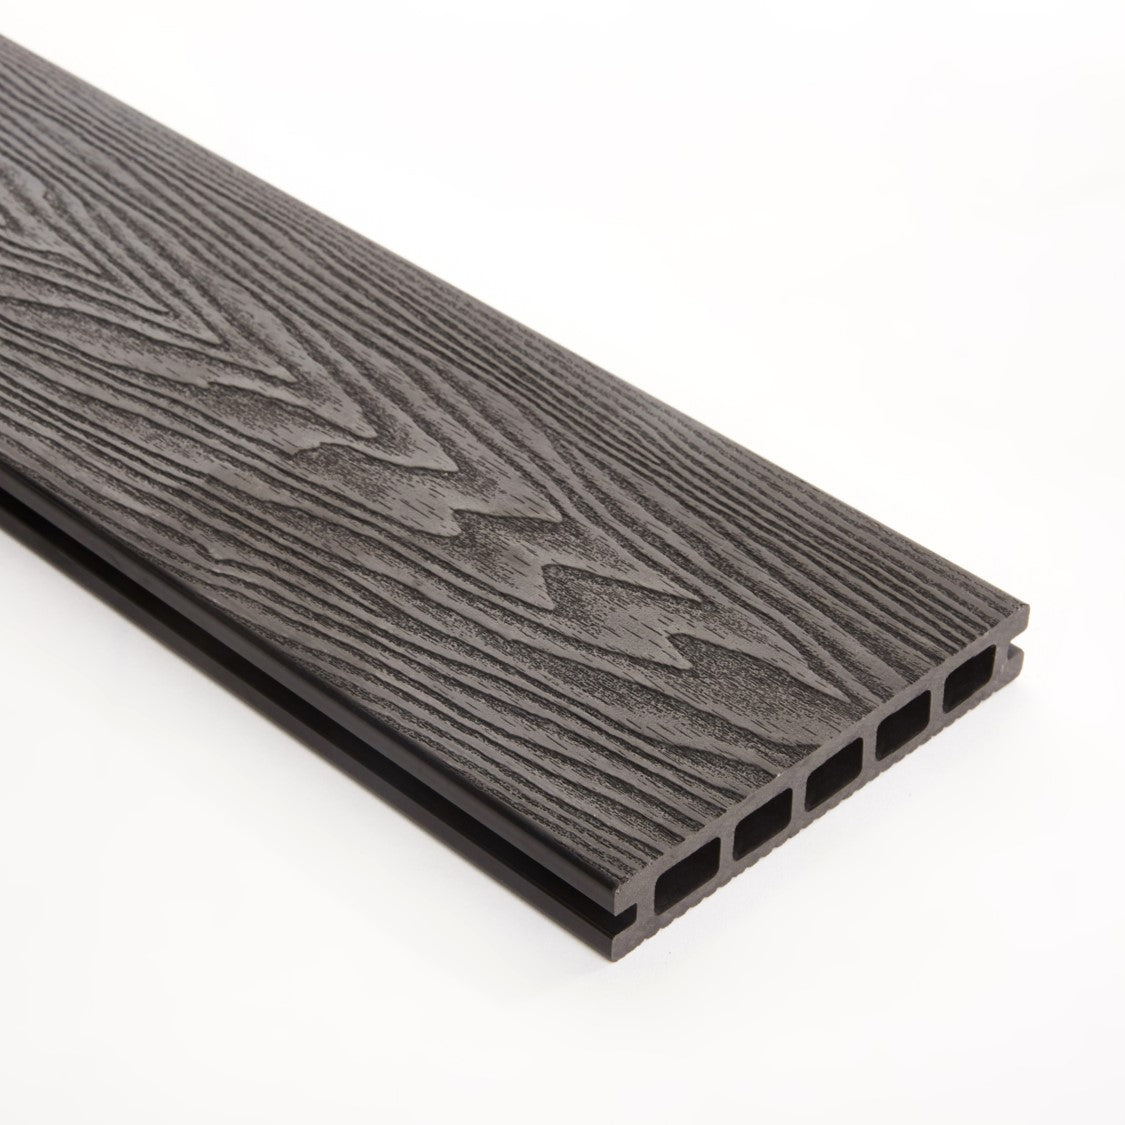 Triton 3m Double Faced Woodgrain Composite Decking Board 148mm X 25mm - Trade Warehouse